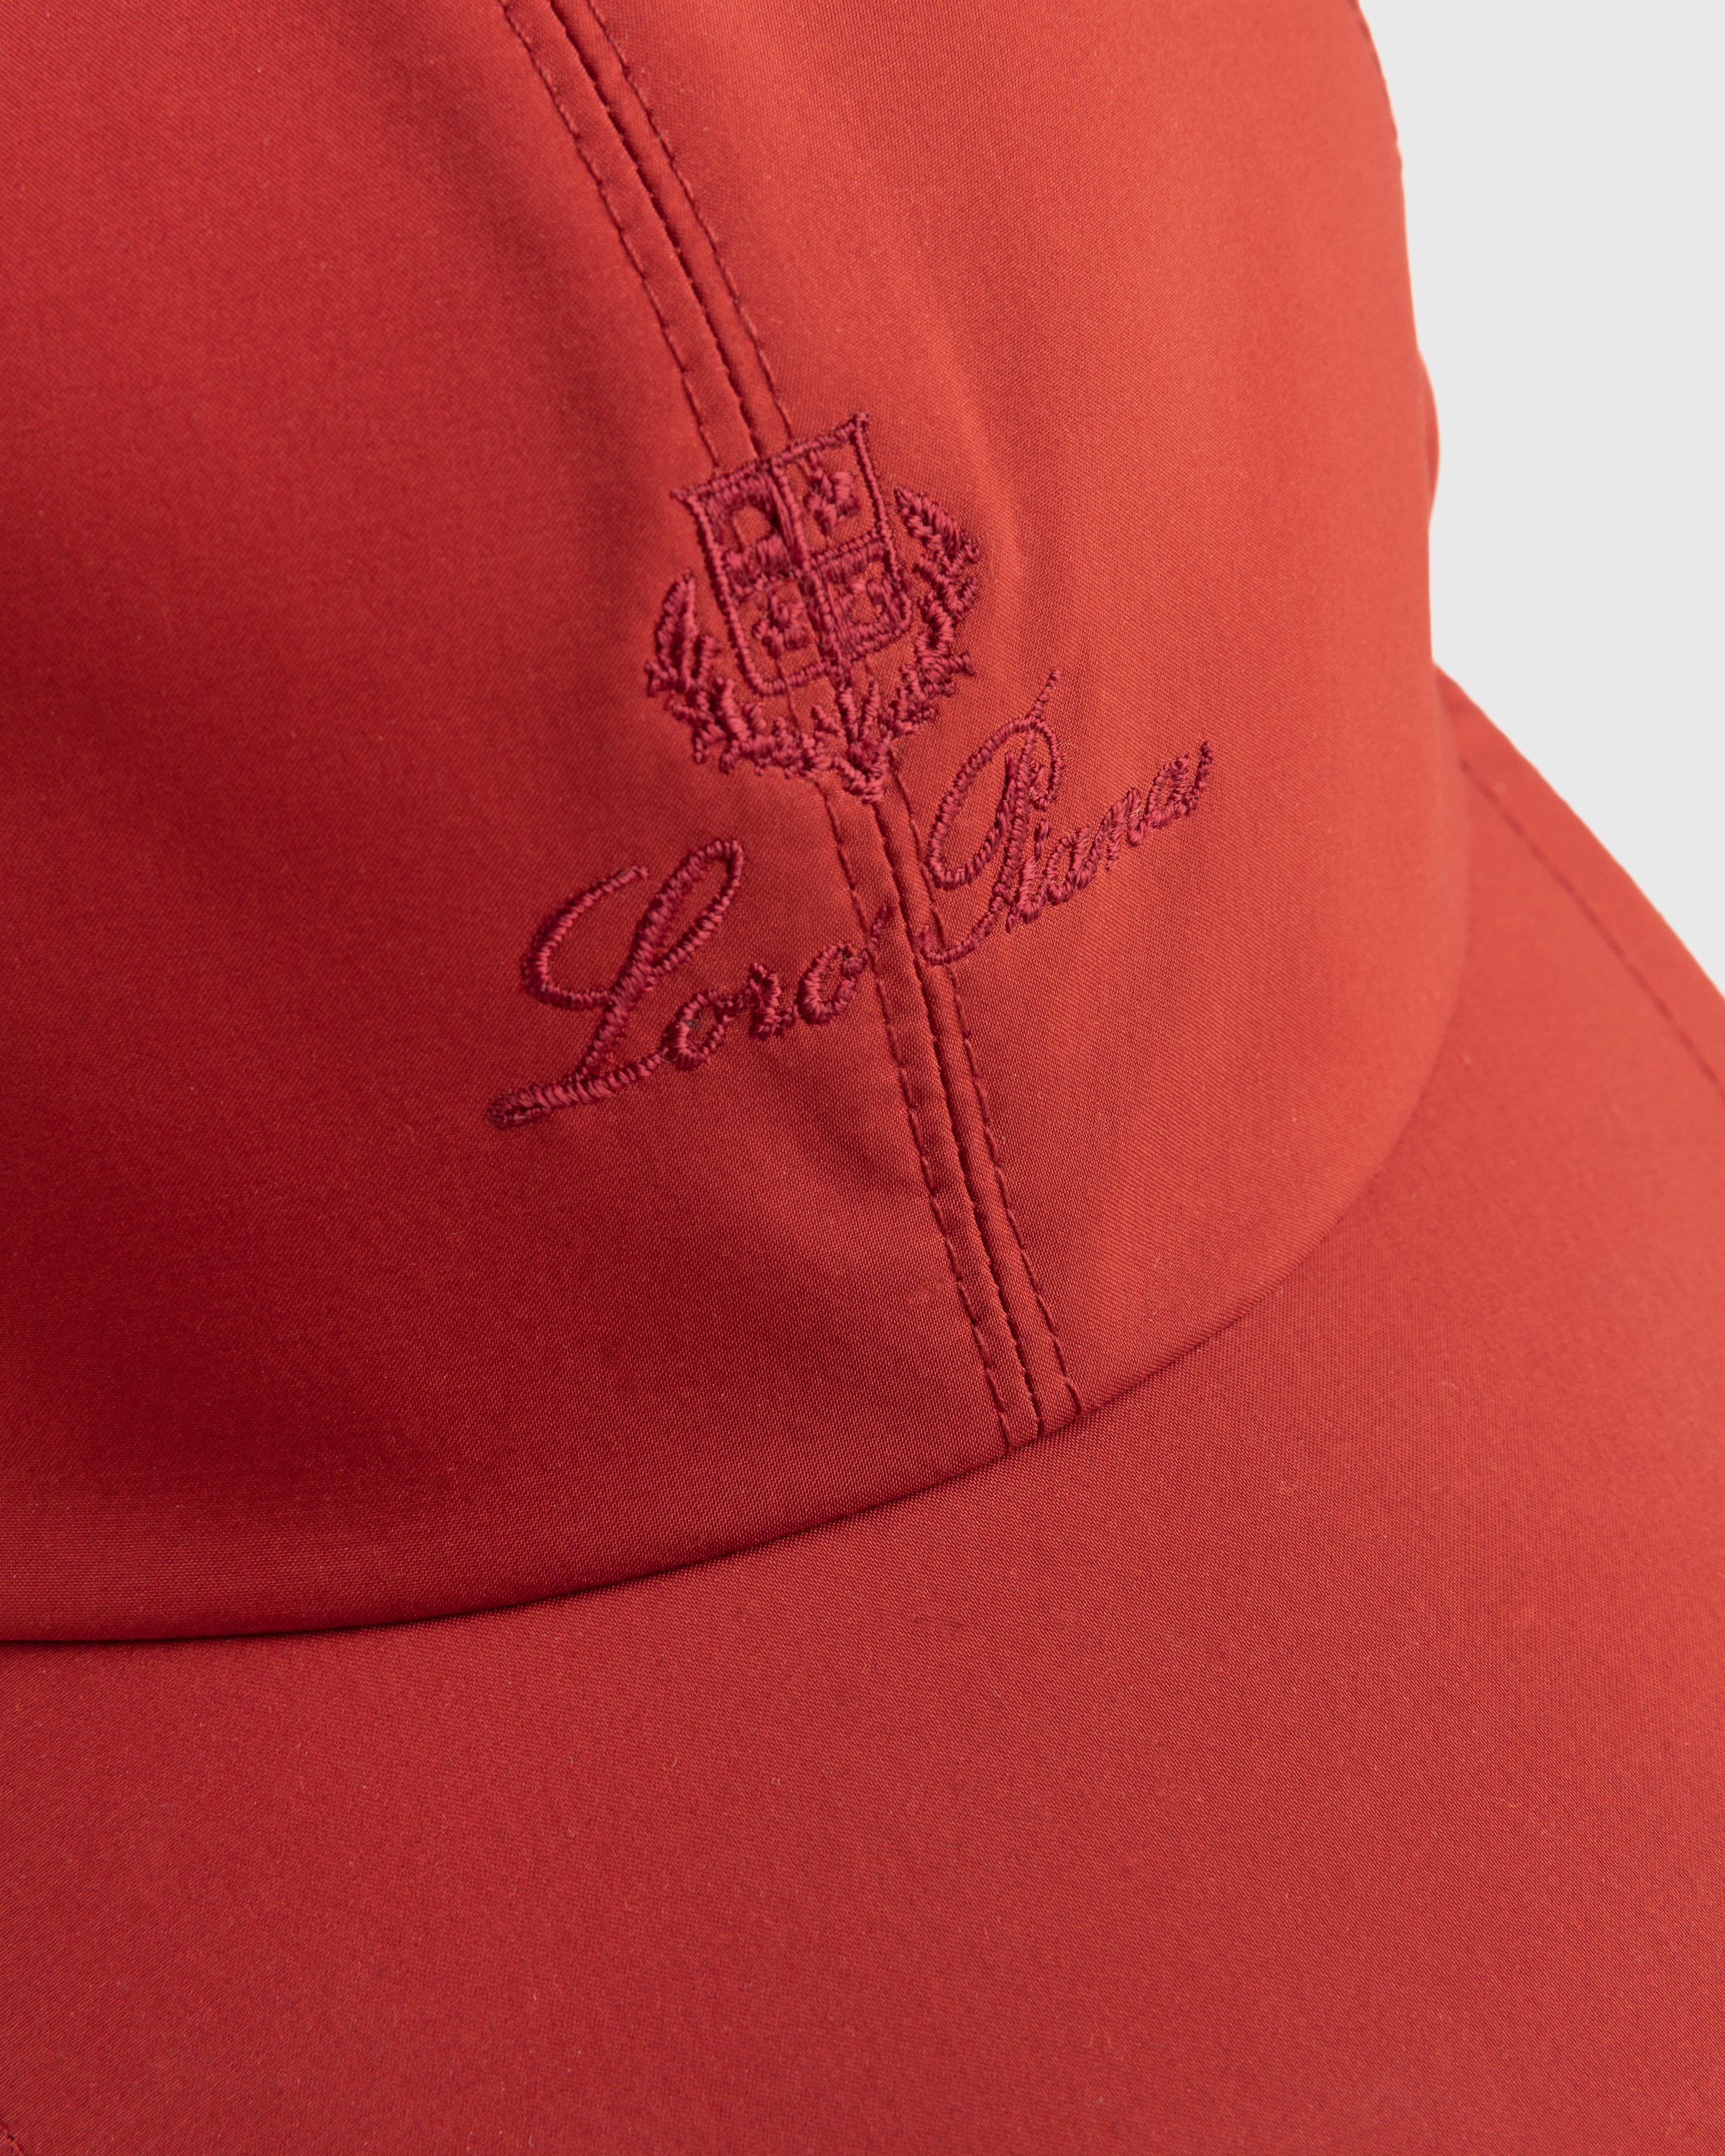 Loro Piana - Bicolor Baseball Cap Hibiscus / Ivory - Accessories - Red - Image 4